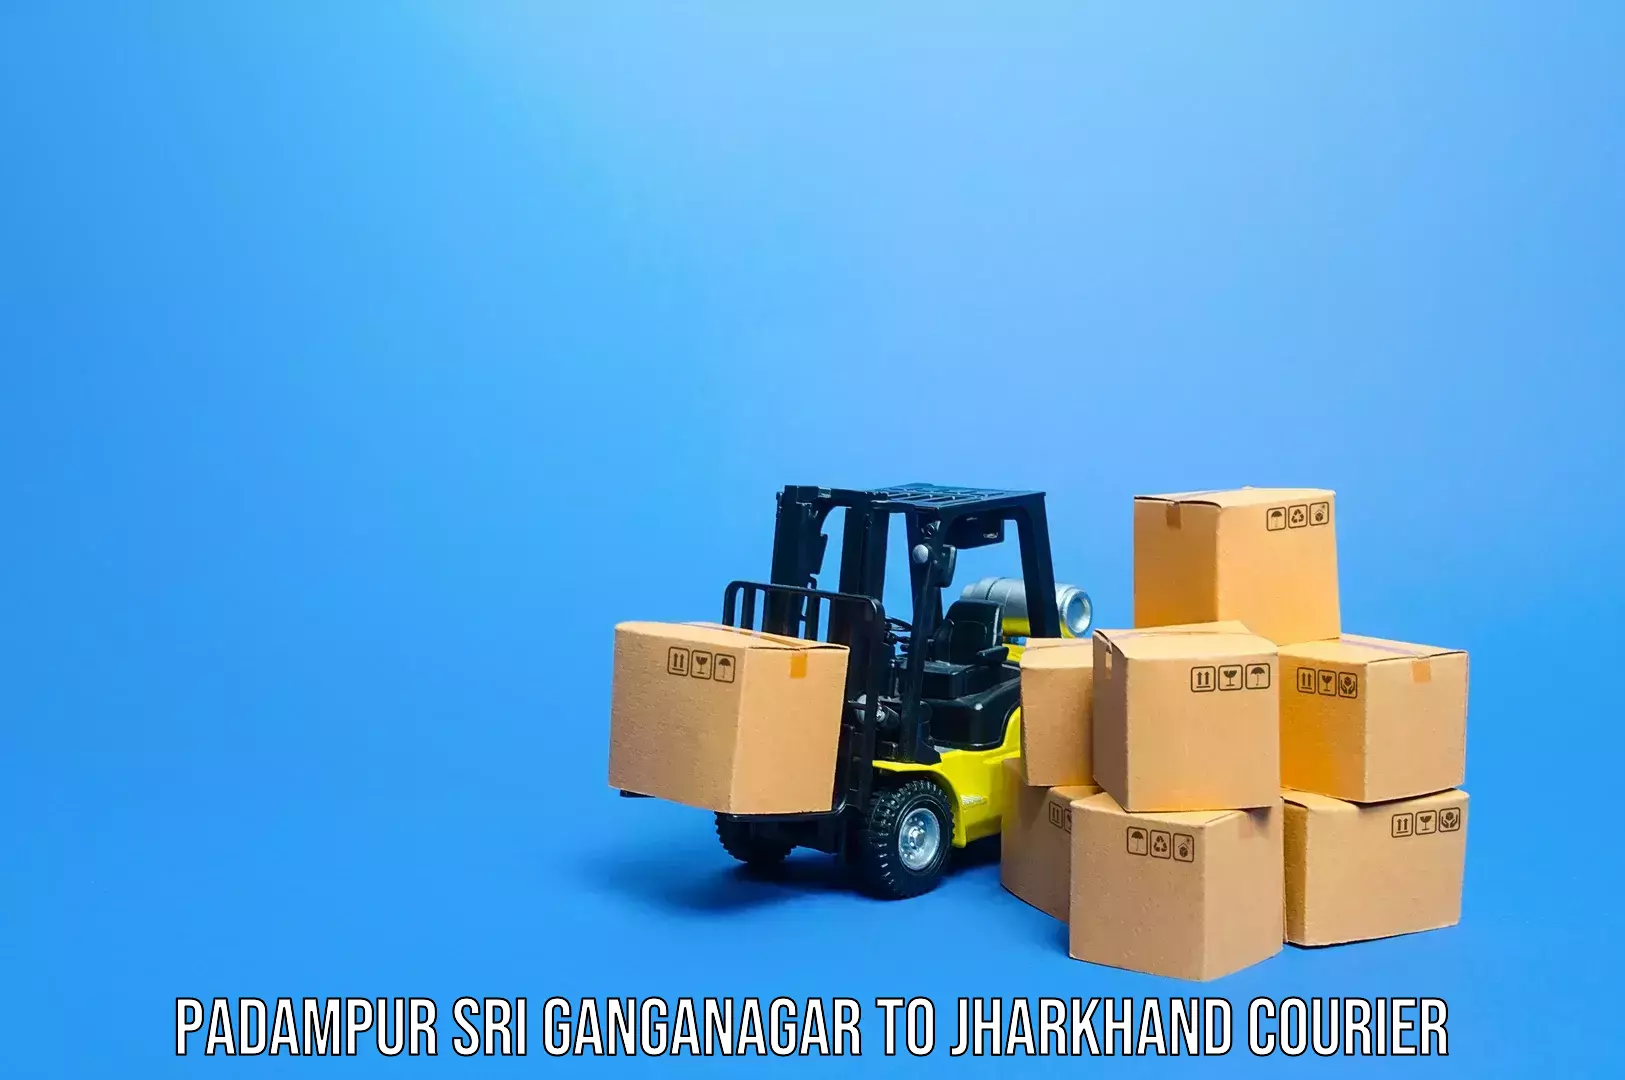 Luggage shipment specialists Padampur Sri Ganganagar to Jagannathpur